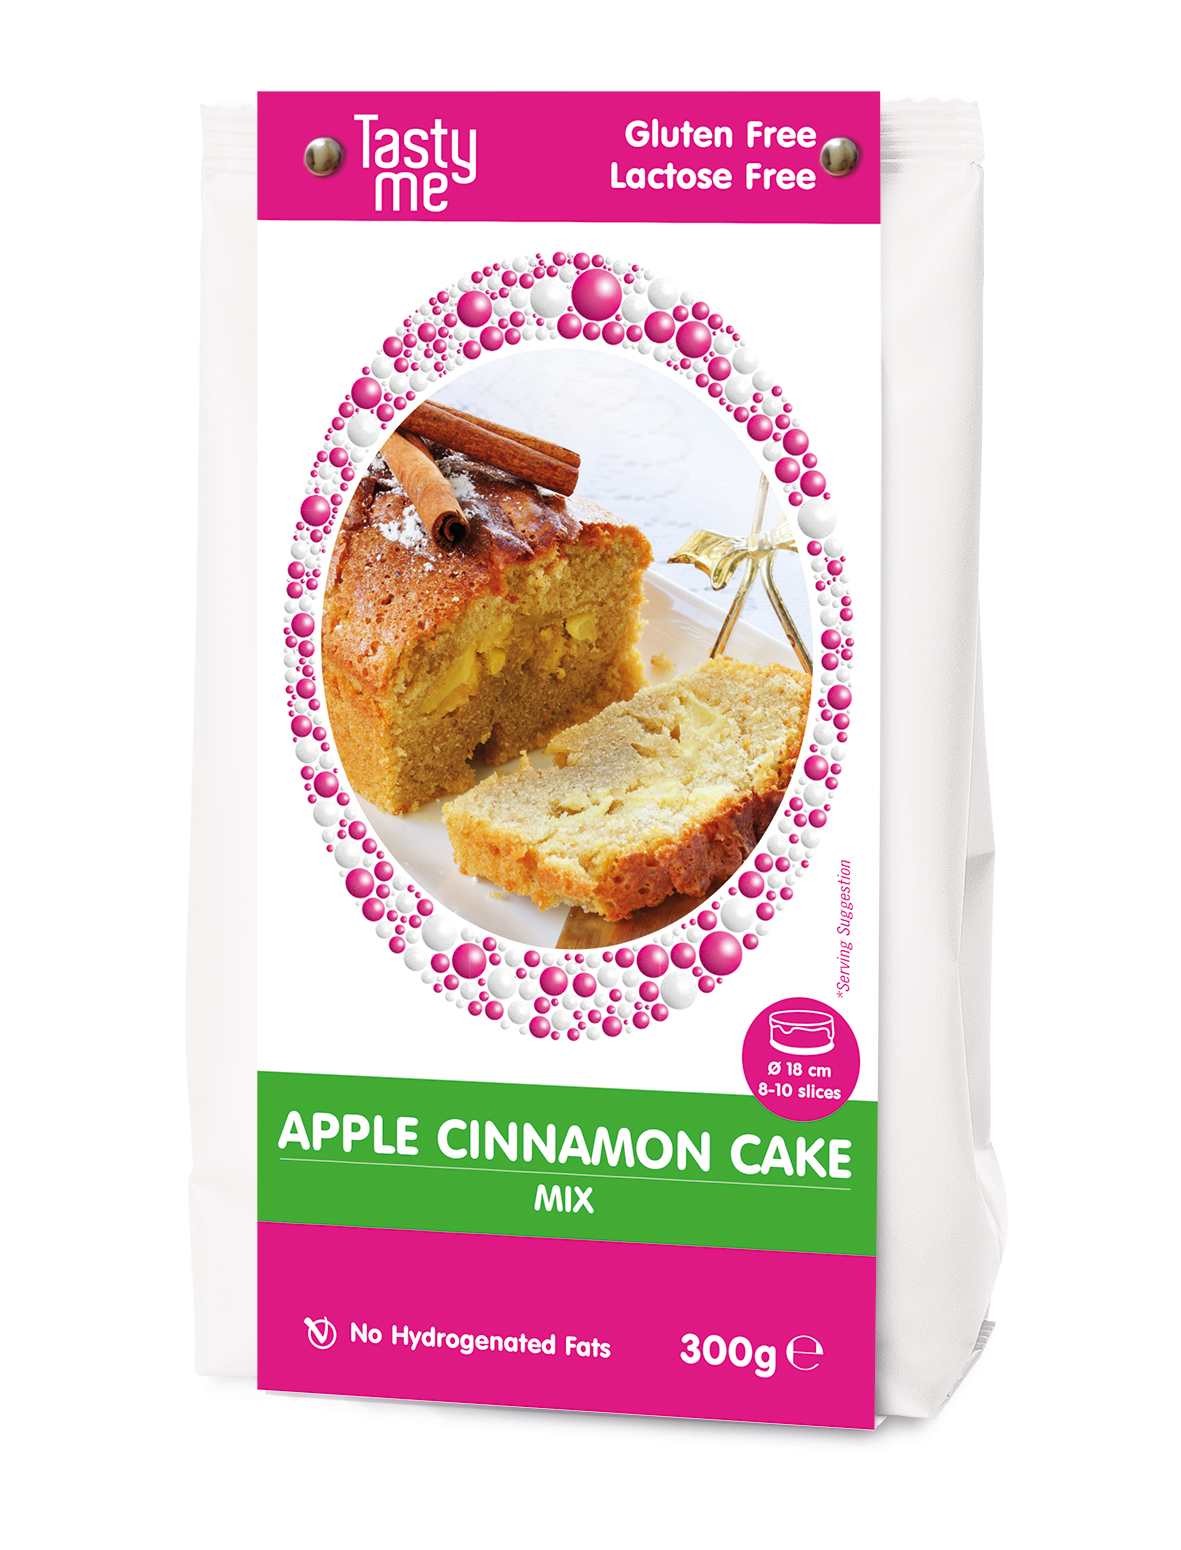 Apple cinnamon cake mix 300g - gluten-free